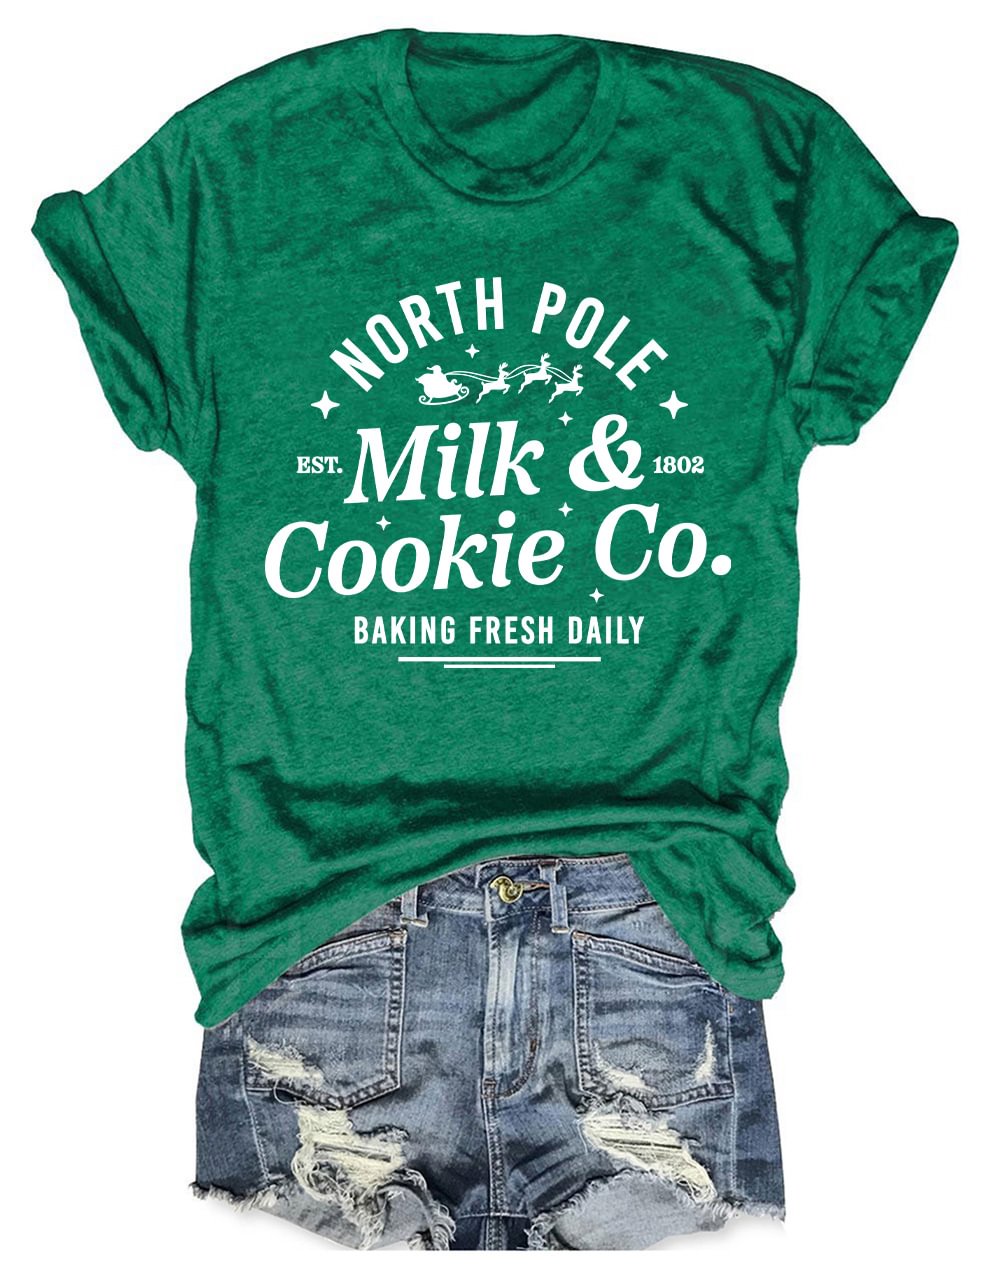 North Pole Milk & Cookies Co Christmas T-Shirt